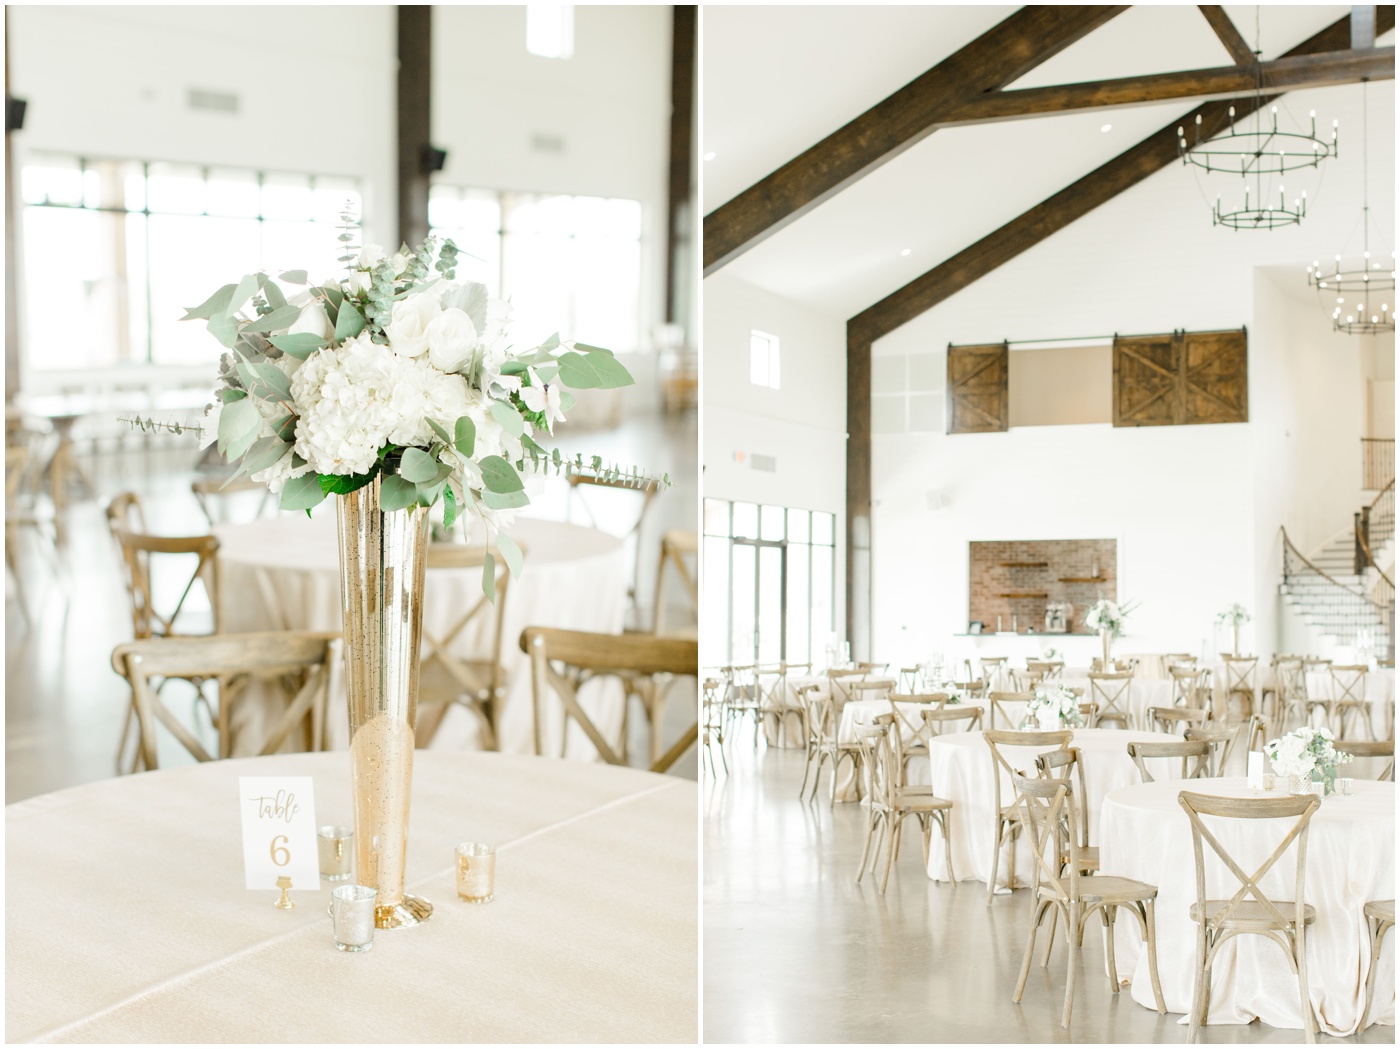 reception details of a Texas wedding venue